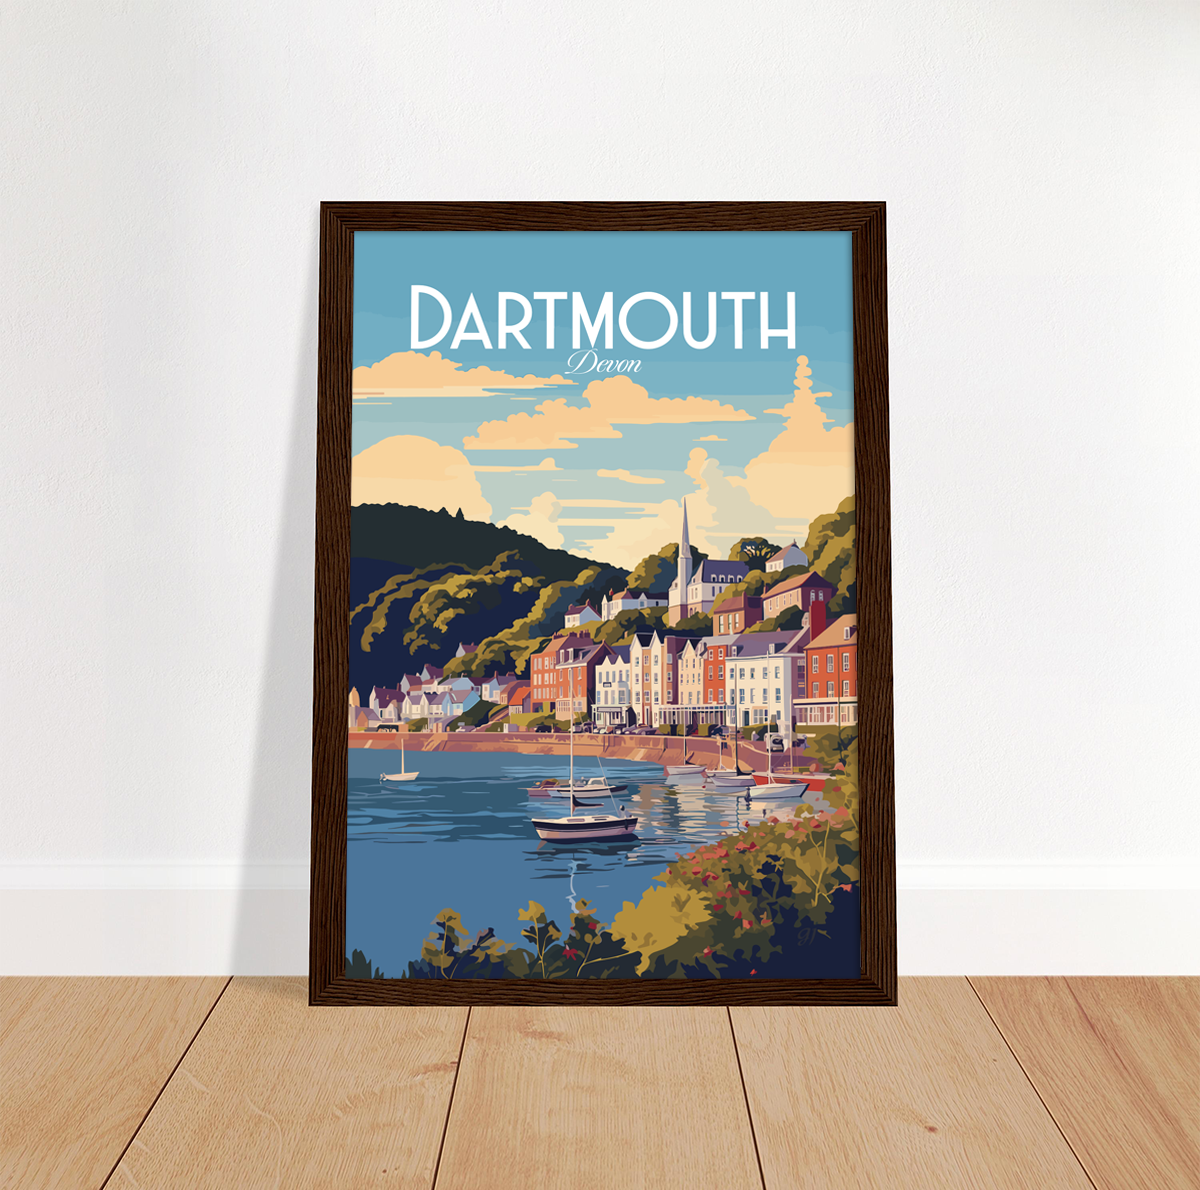 Dartmouth poster by bon voyage design